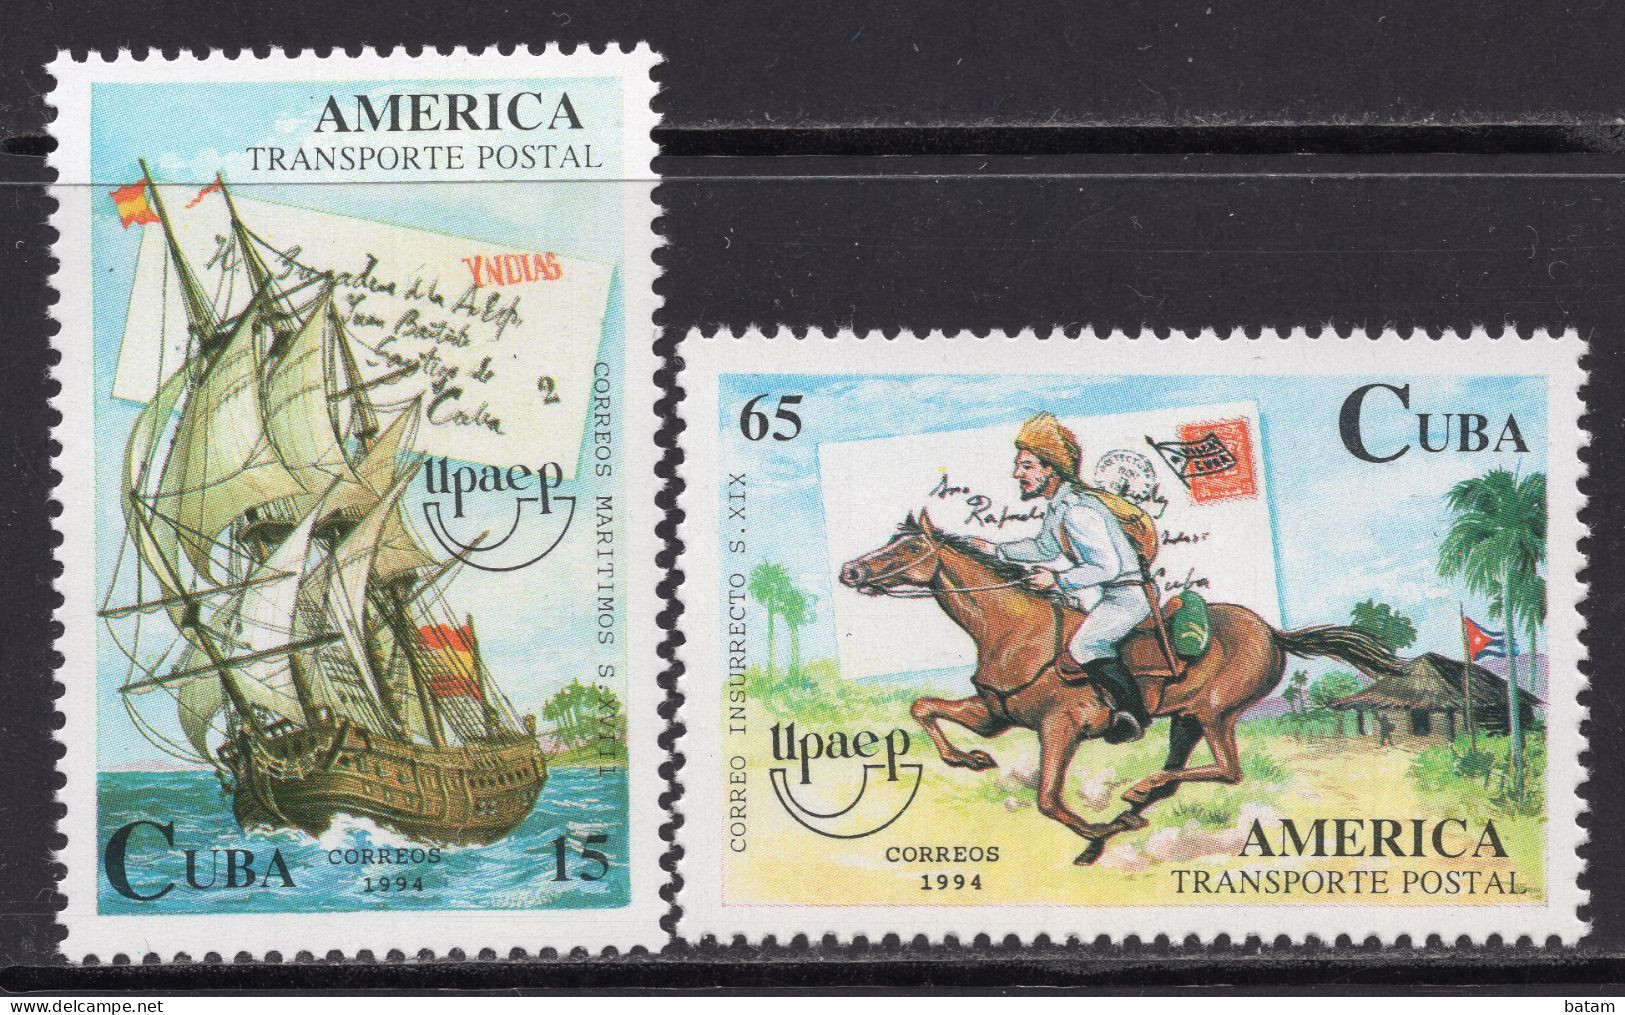 CUBA 1994 - Postal Transport - America - Ship - Hors - MNH Set - Unused Stamps